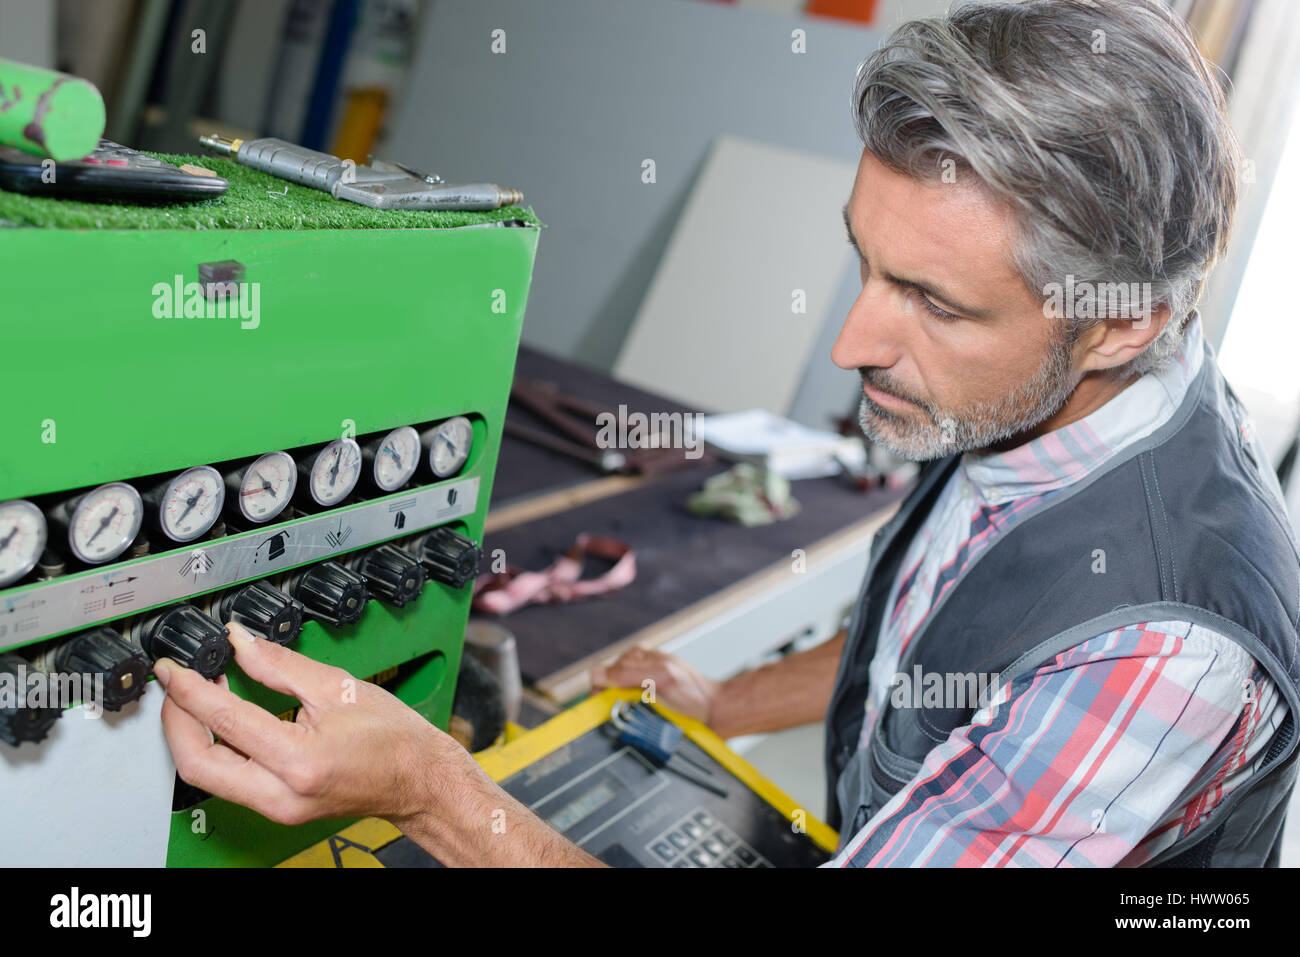 Man adjusting controls on industrial machine Stock Photo